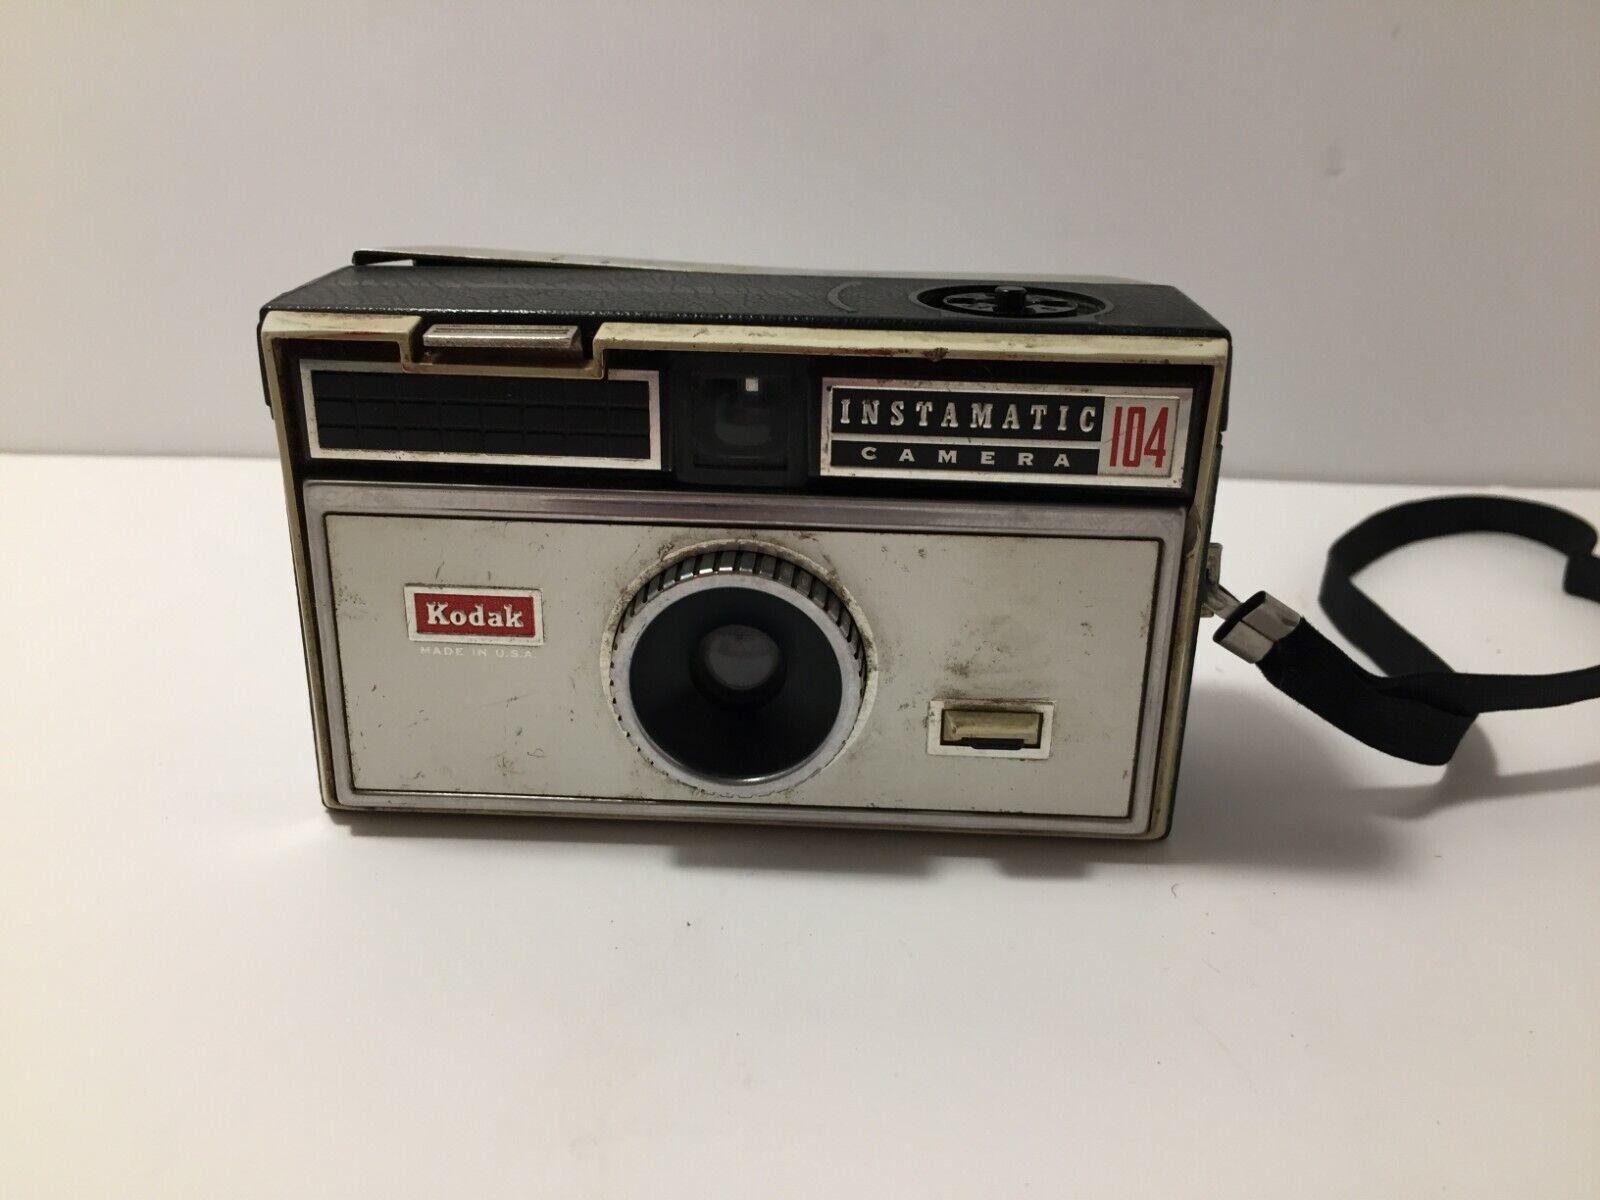 Vintage Kodak Instamatic 104 Camera Untested 1960's - $16.27